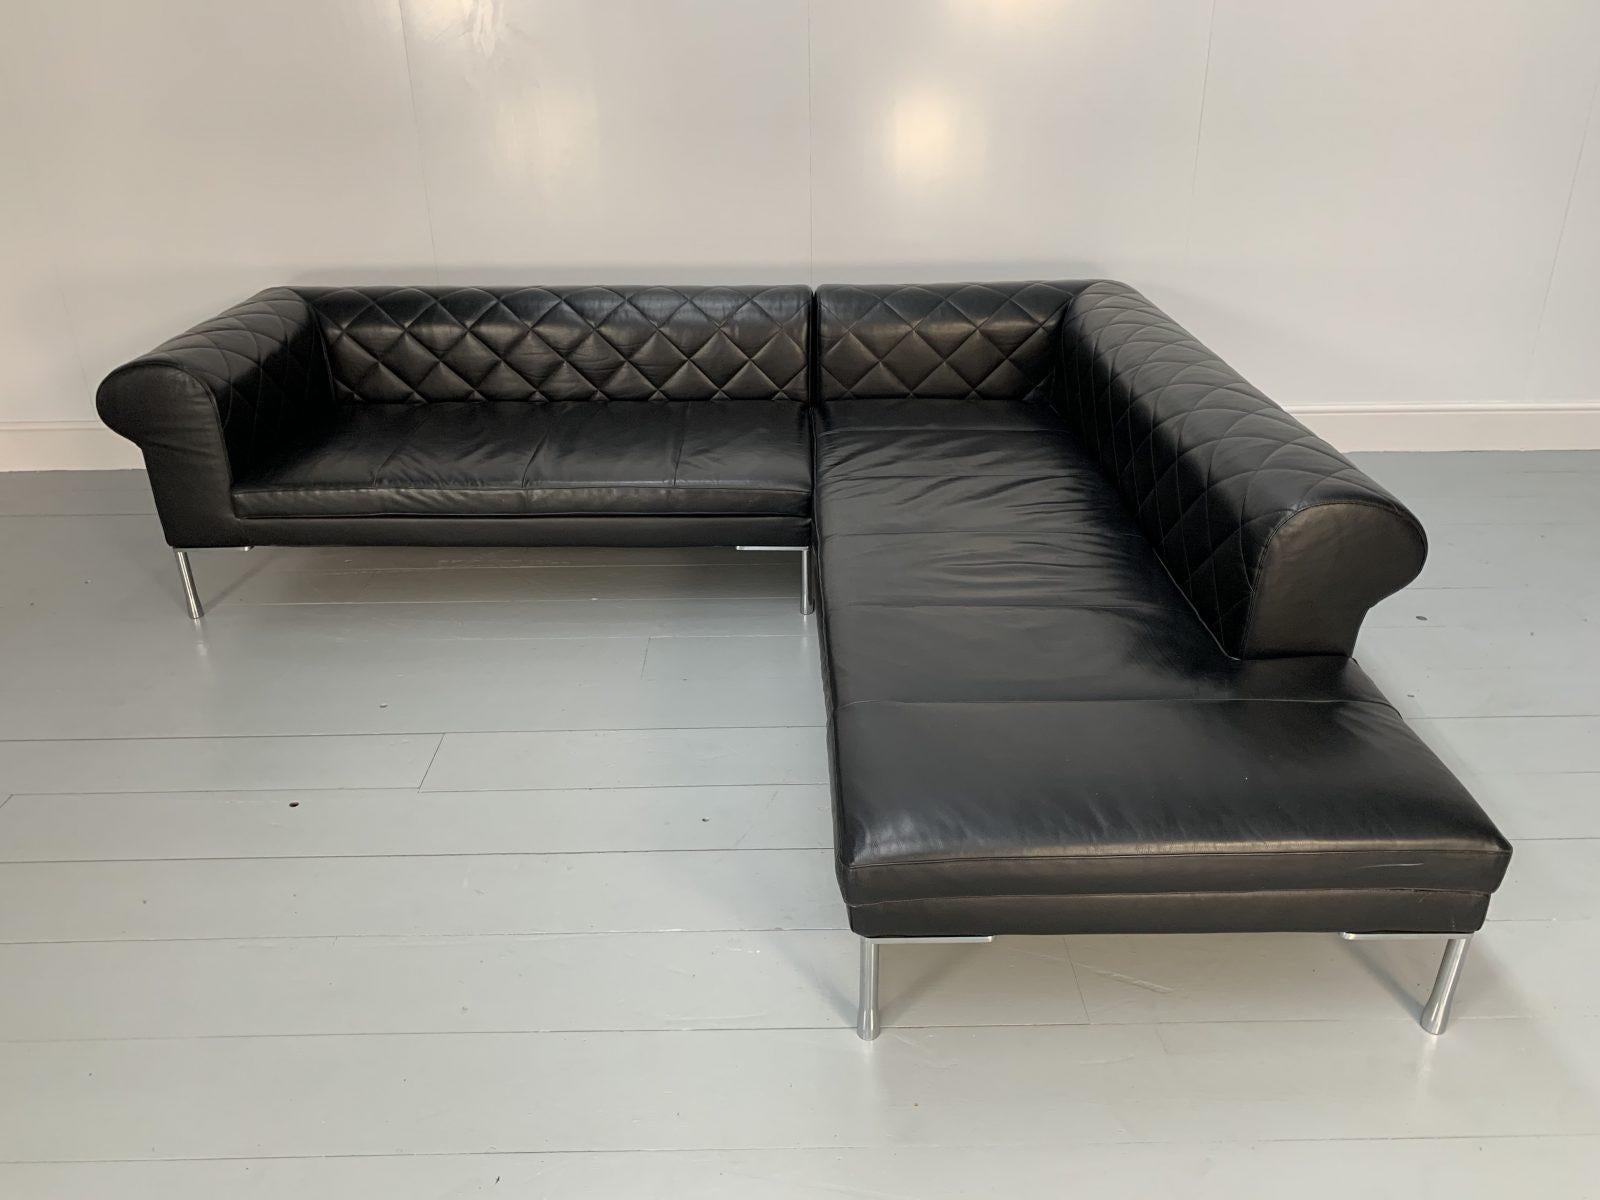 Zanotta “1320 Barocco” Sofa, L- Shape 5-Seat, in Black “Pelle” Leather In Good Condition For Sale In Barrowford, GB